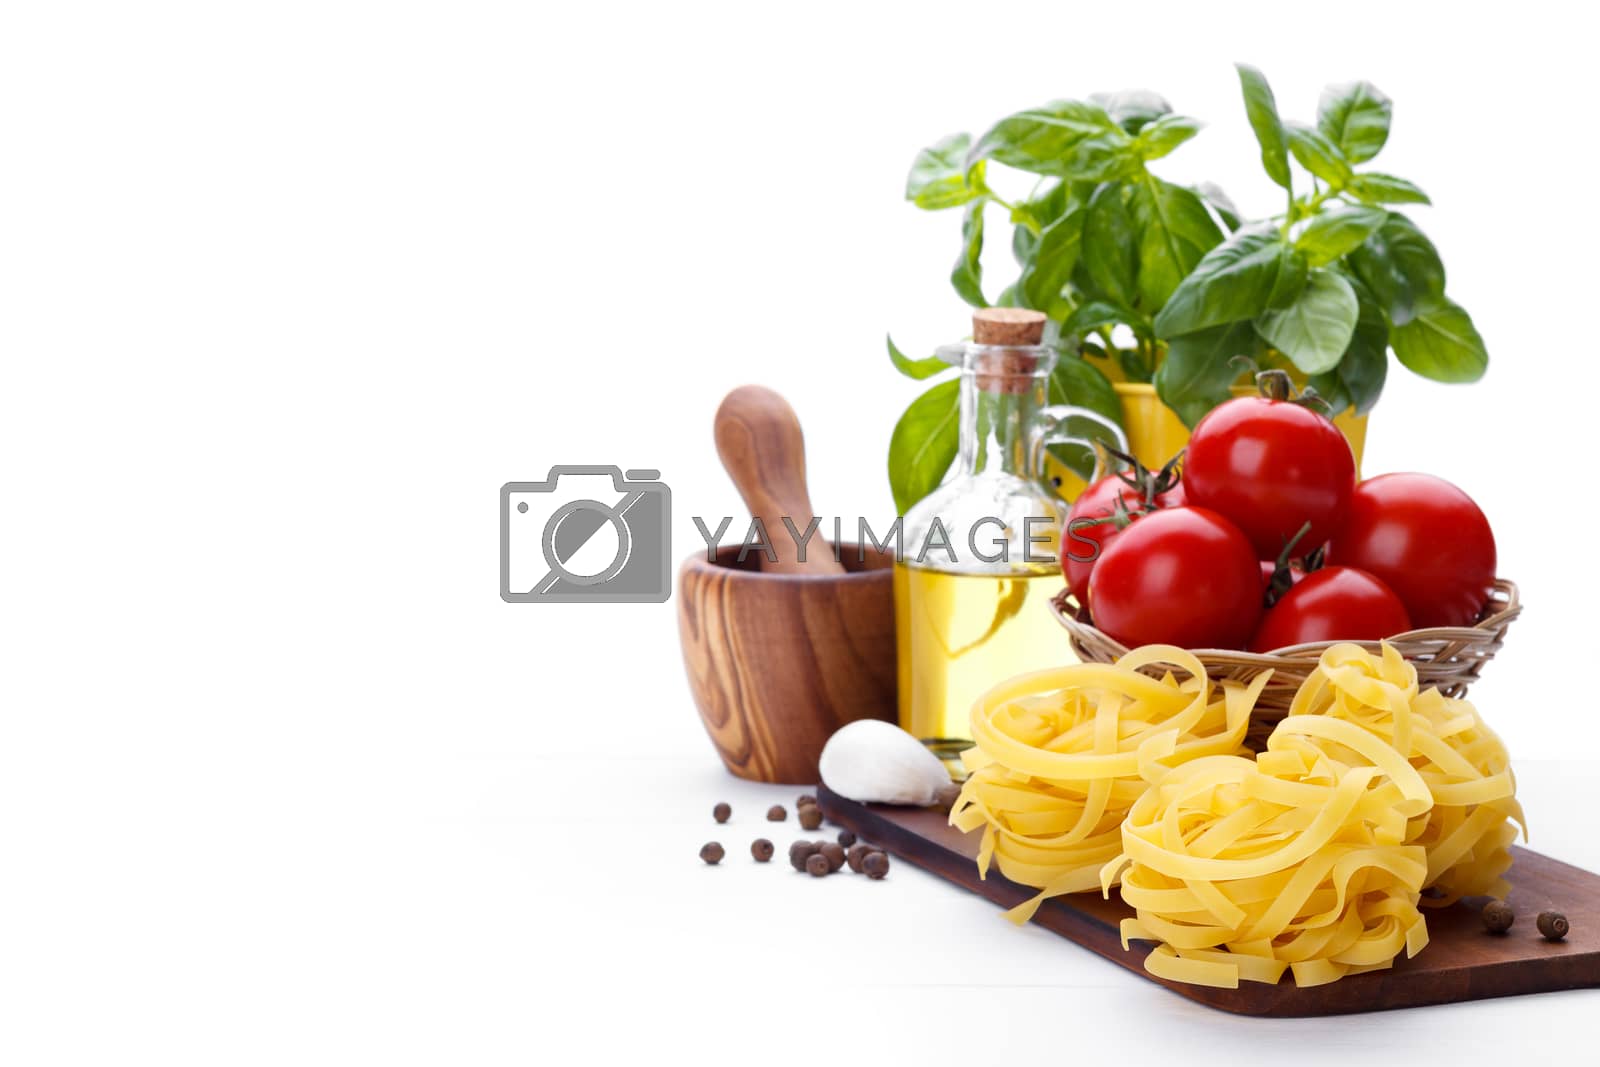 Royalty free image of Italian pasta ingredients by Lana_M